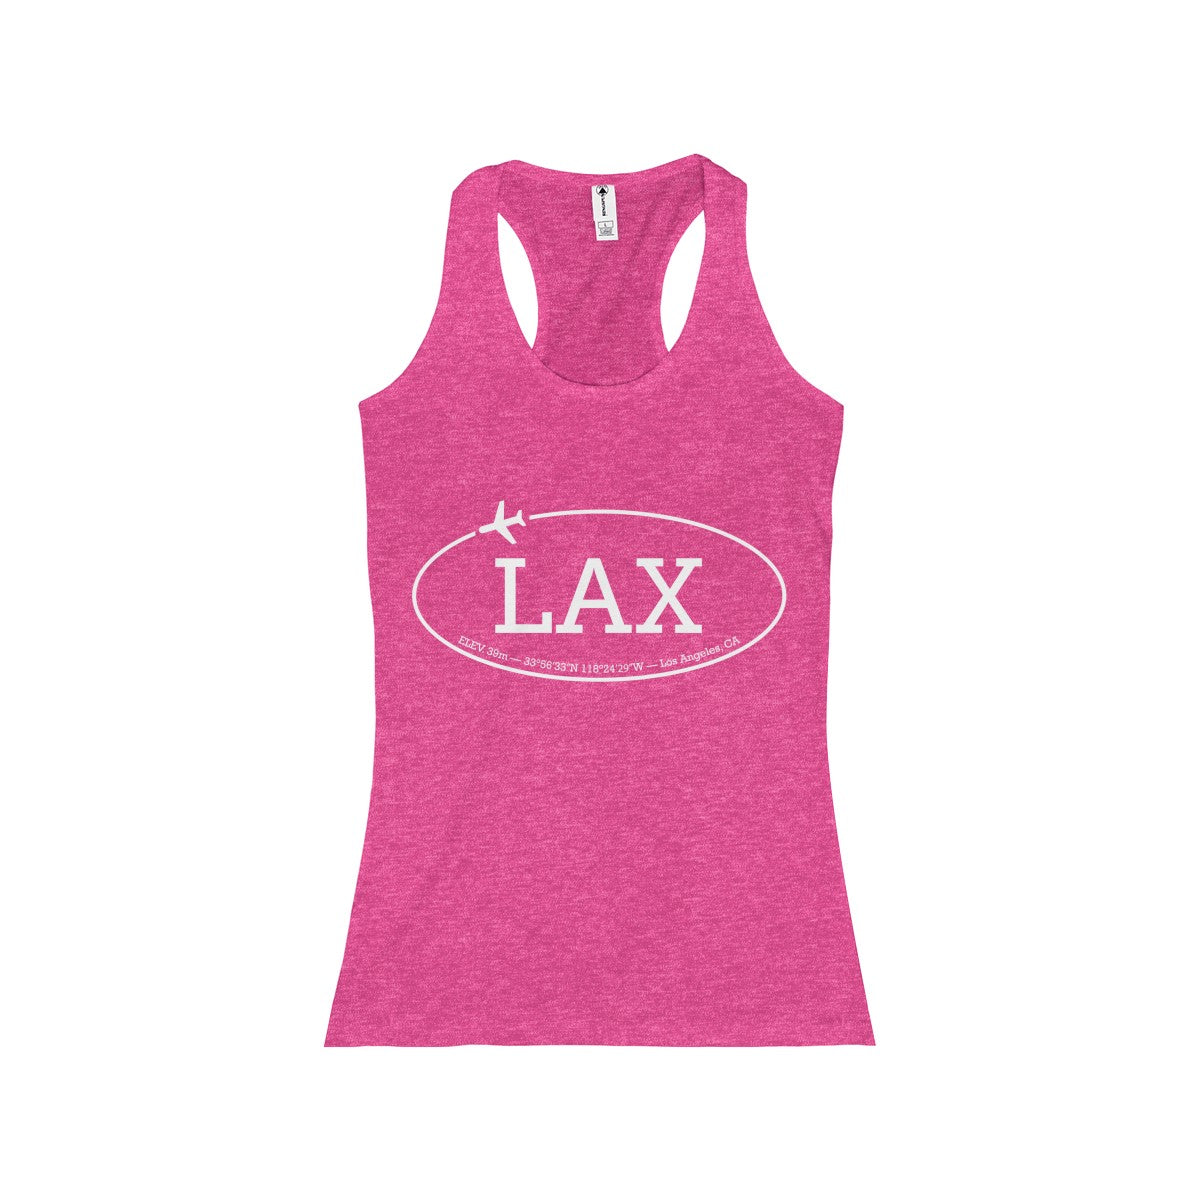 LAX Local - Women's Racerback Tank